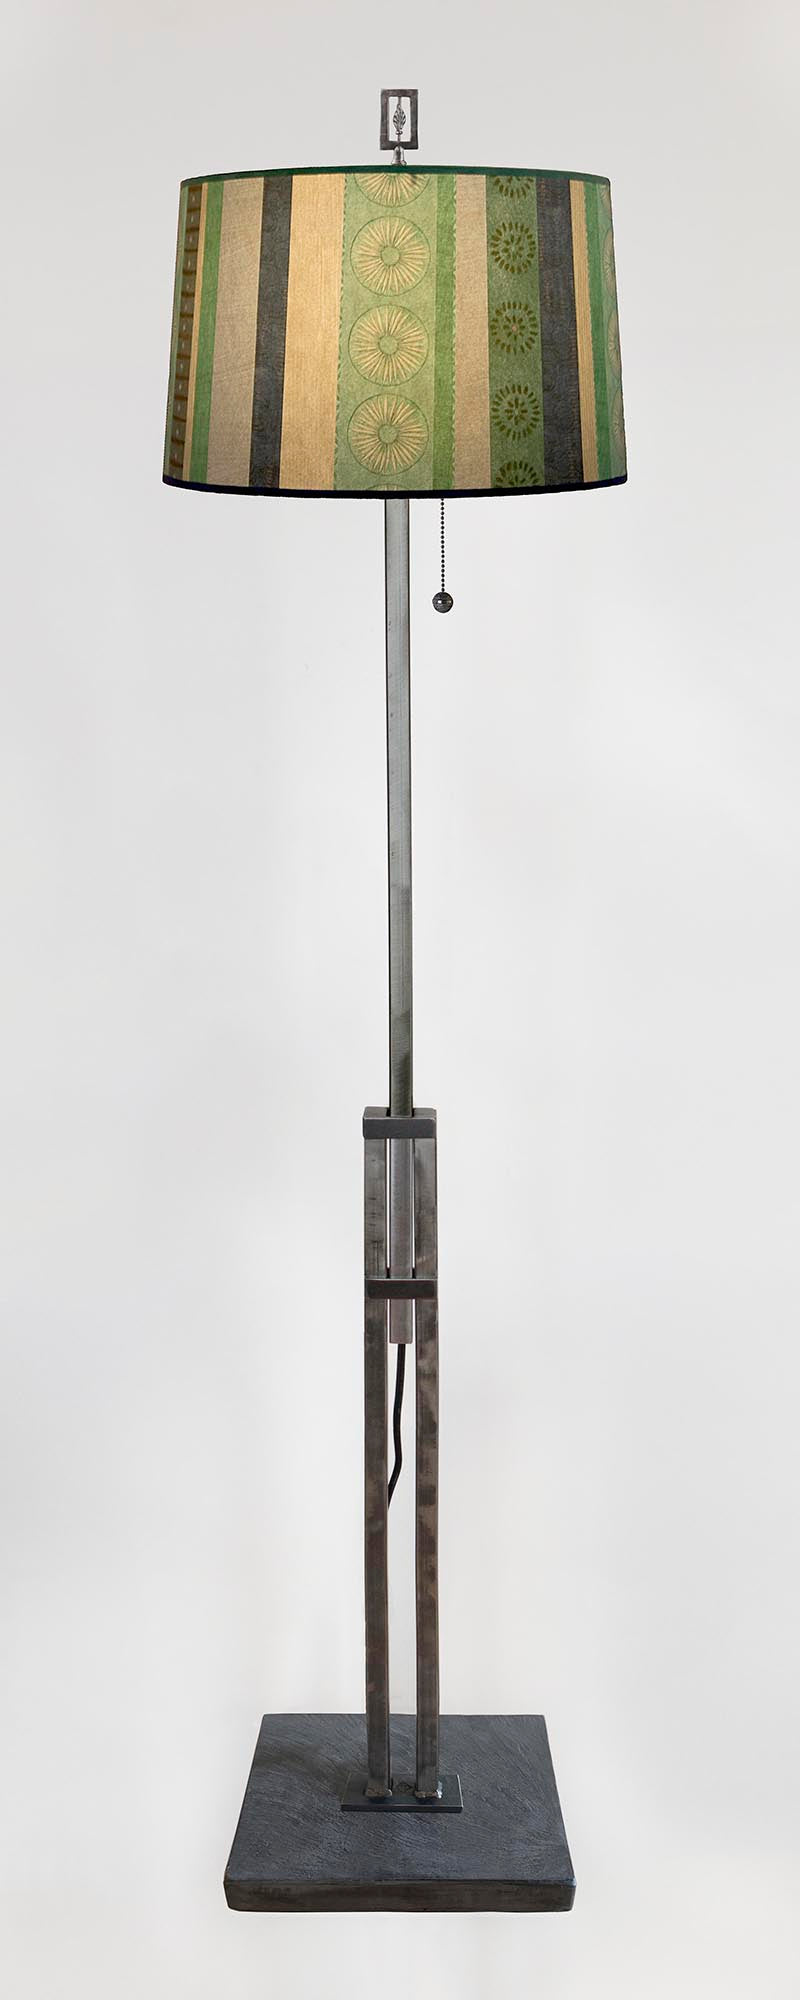 Janna Ugone &amp; Co Floor Lamps Adjustable-Height Steel Floor Lamp with Large Drum Shade in Serape Waters